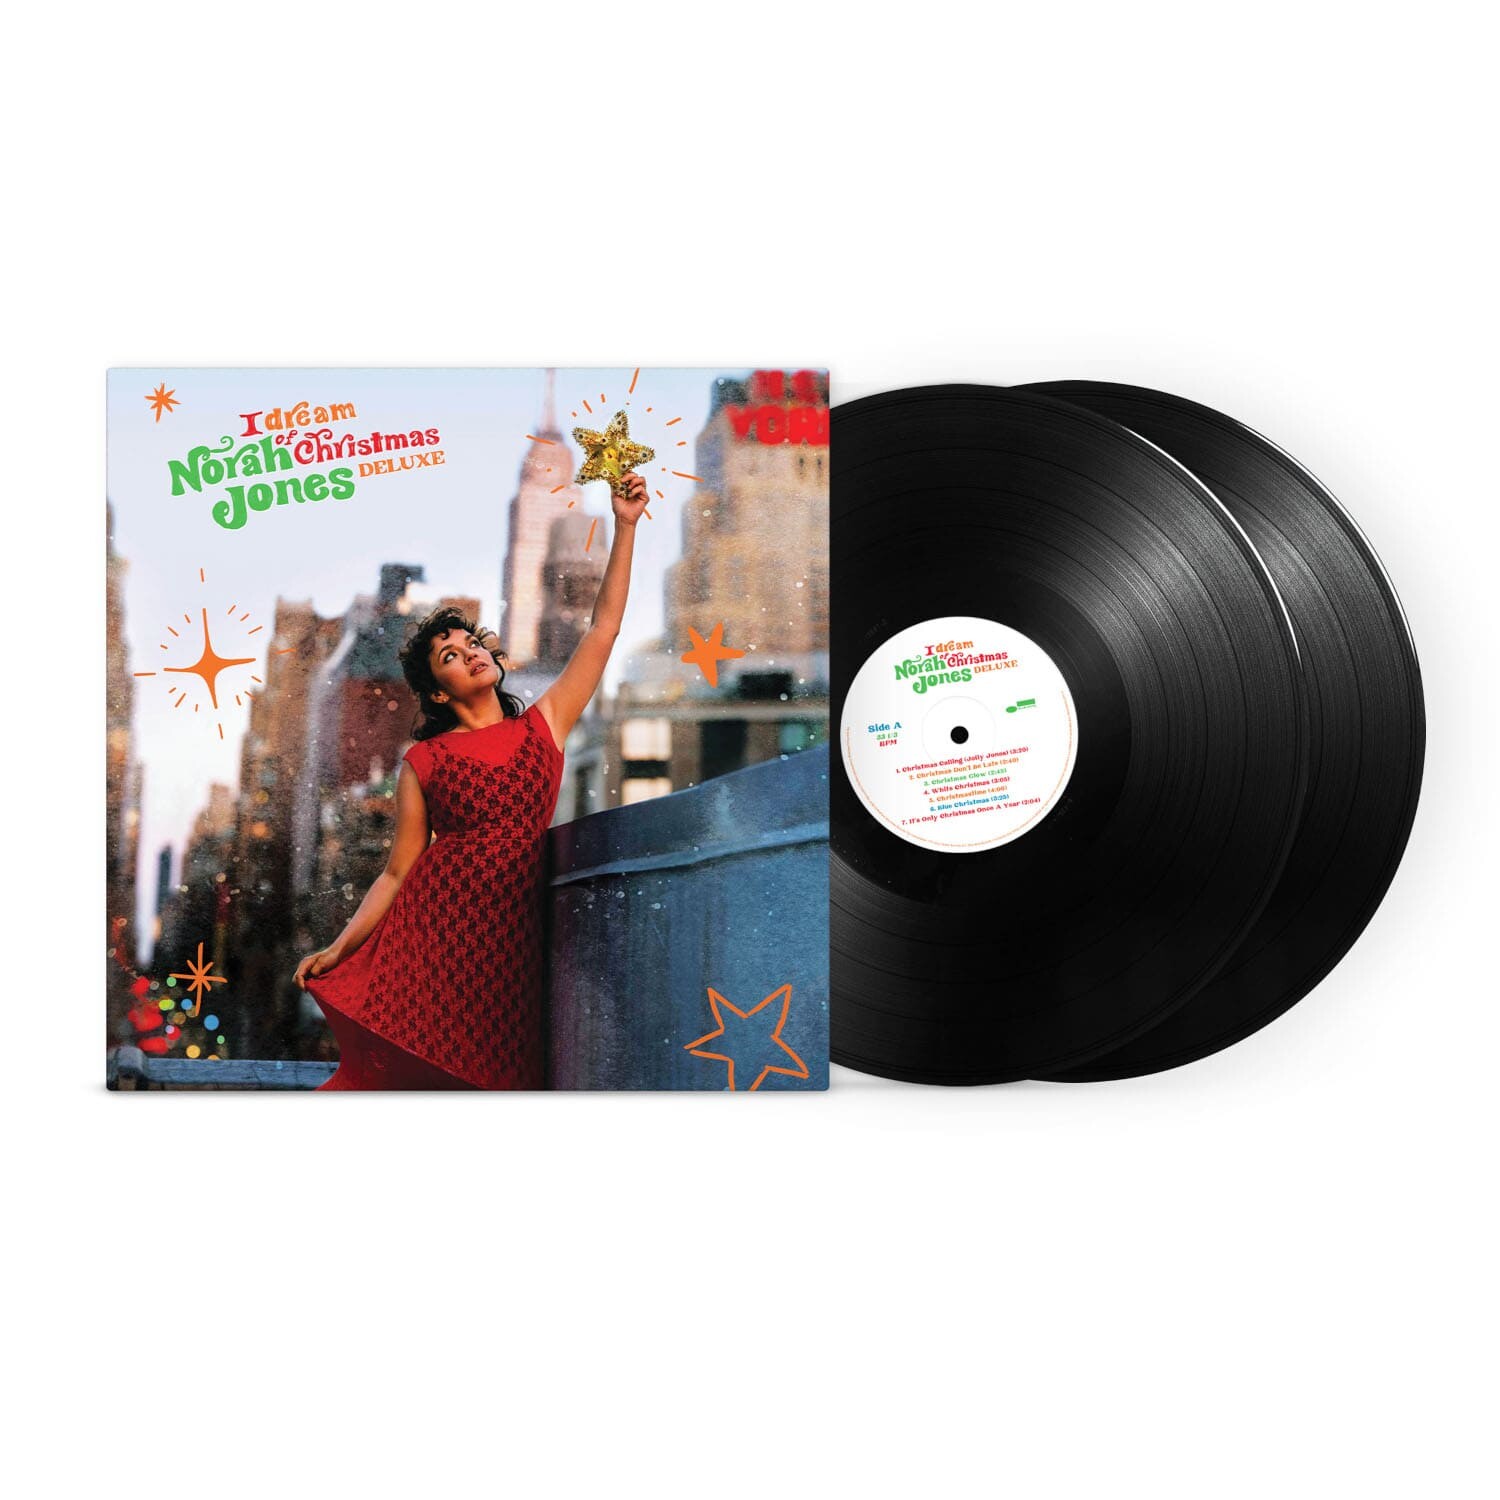 Bravado - I Dream Of Christmas (Deluxe Edition) - Norah Jones - 2LP